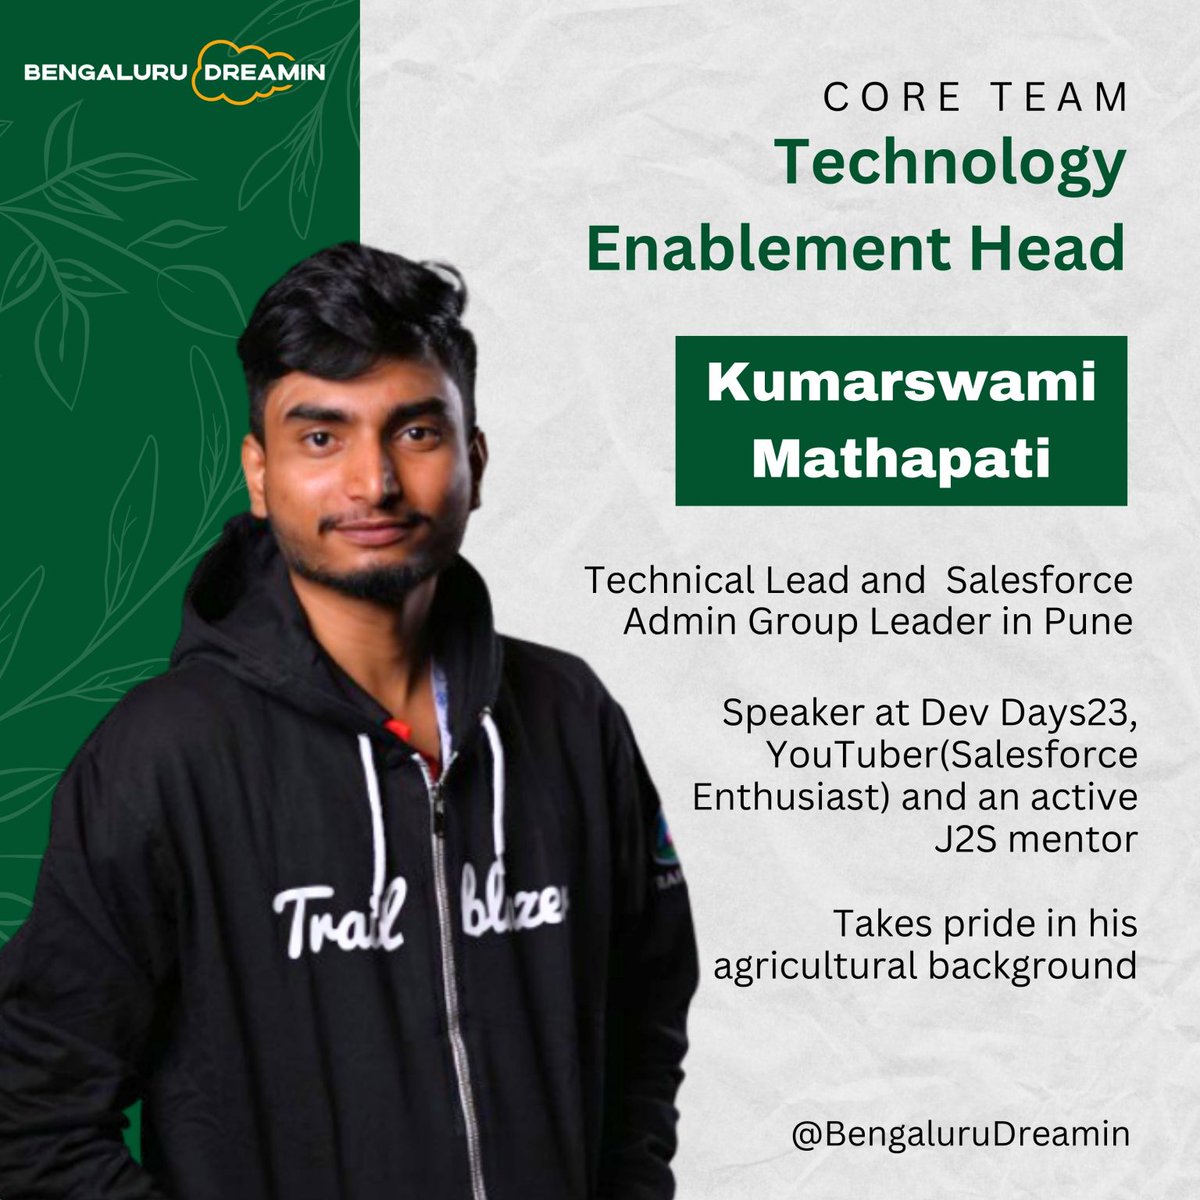 𝐌𝐞𝐞𝐭 @MathpatiKumar, 𝐎𝐮𝐫 𝐜𝐨𝐫𝐞 𝐭𝐞𝐚𝐦 𝐦𝐞𝐦𝐛𝐞𝐫 𝐚𝐧𝐝 𝐓𝐞𝐜𝐡𝐧𝐨𝐥𝐨𝐠𝐲 𝐄𝐧𝐚𝐛𝐥𝐞𝐦𝐞𝐧𝐭 𝐇𝐞𝐚𝐝! More details👇 linkedin.com/posts/bengalur… #BengaluruDreamin24 #Salesforce #blrsfhackathon